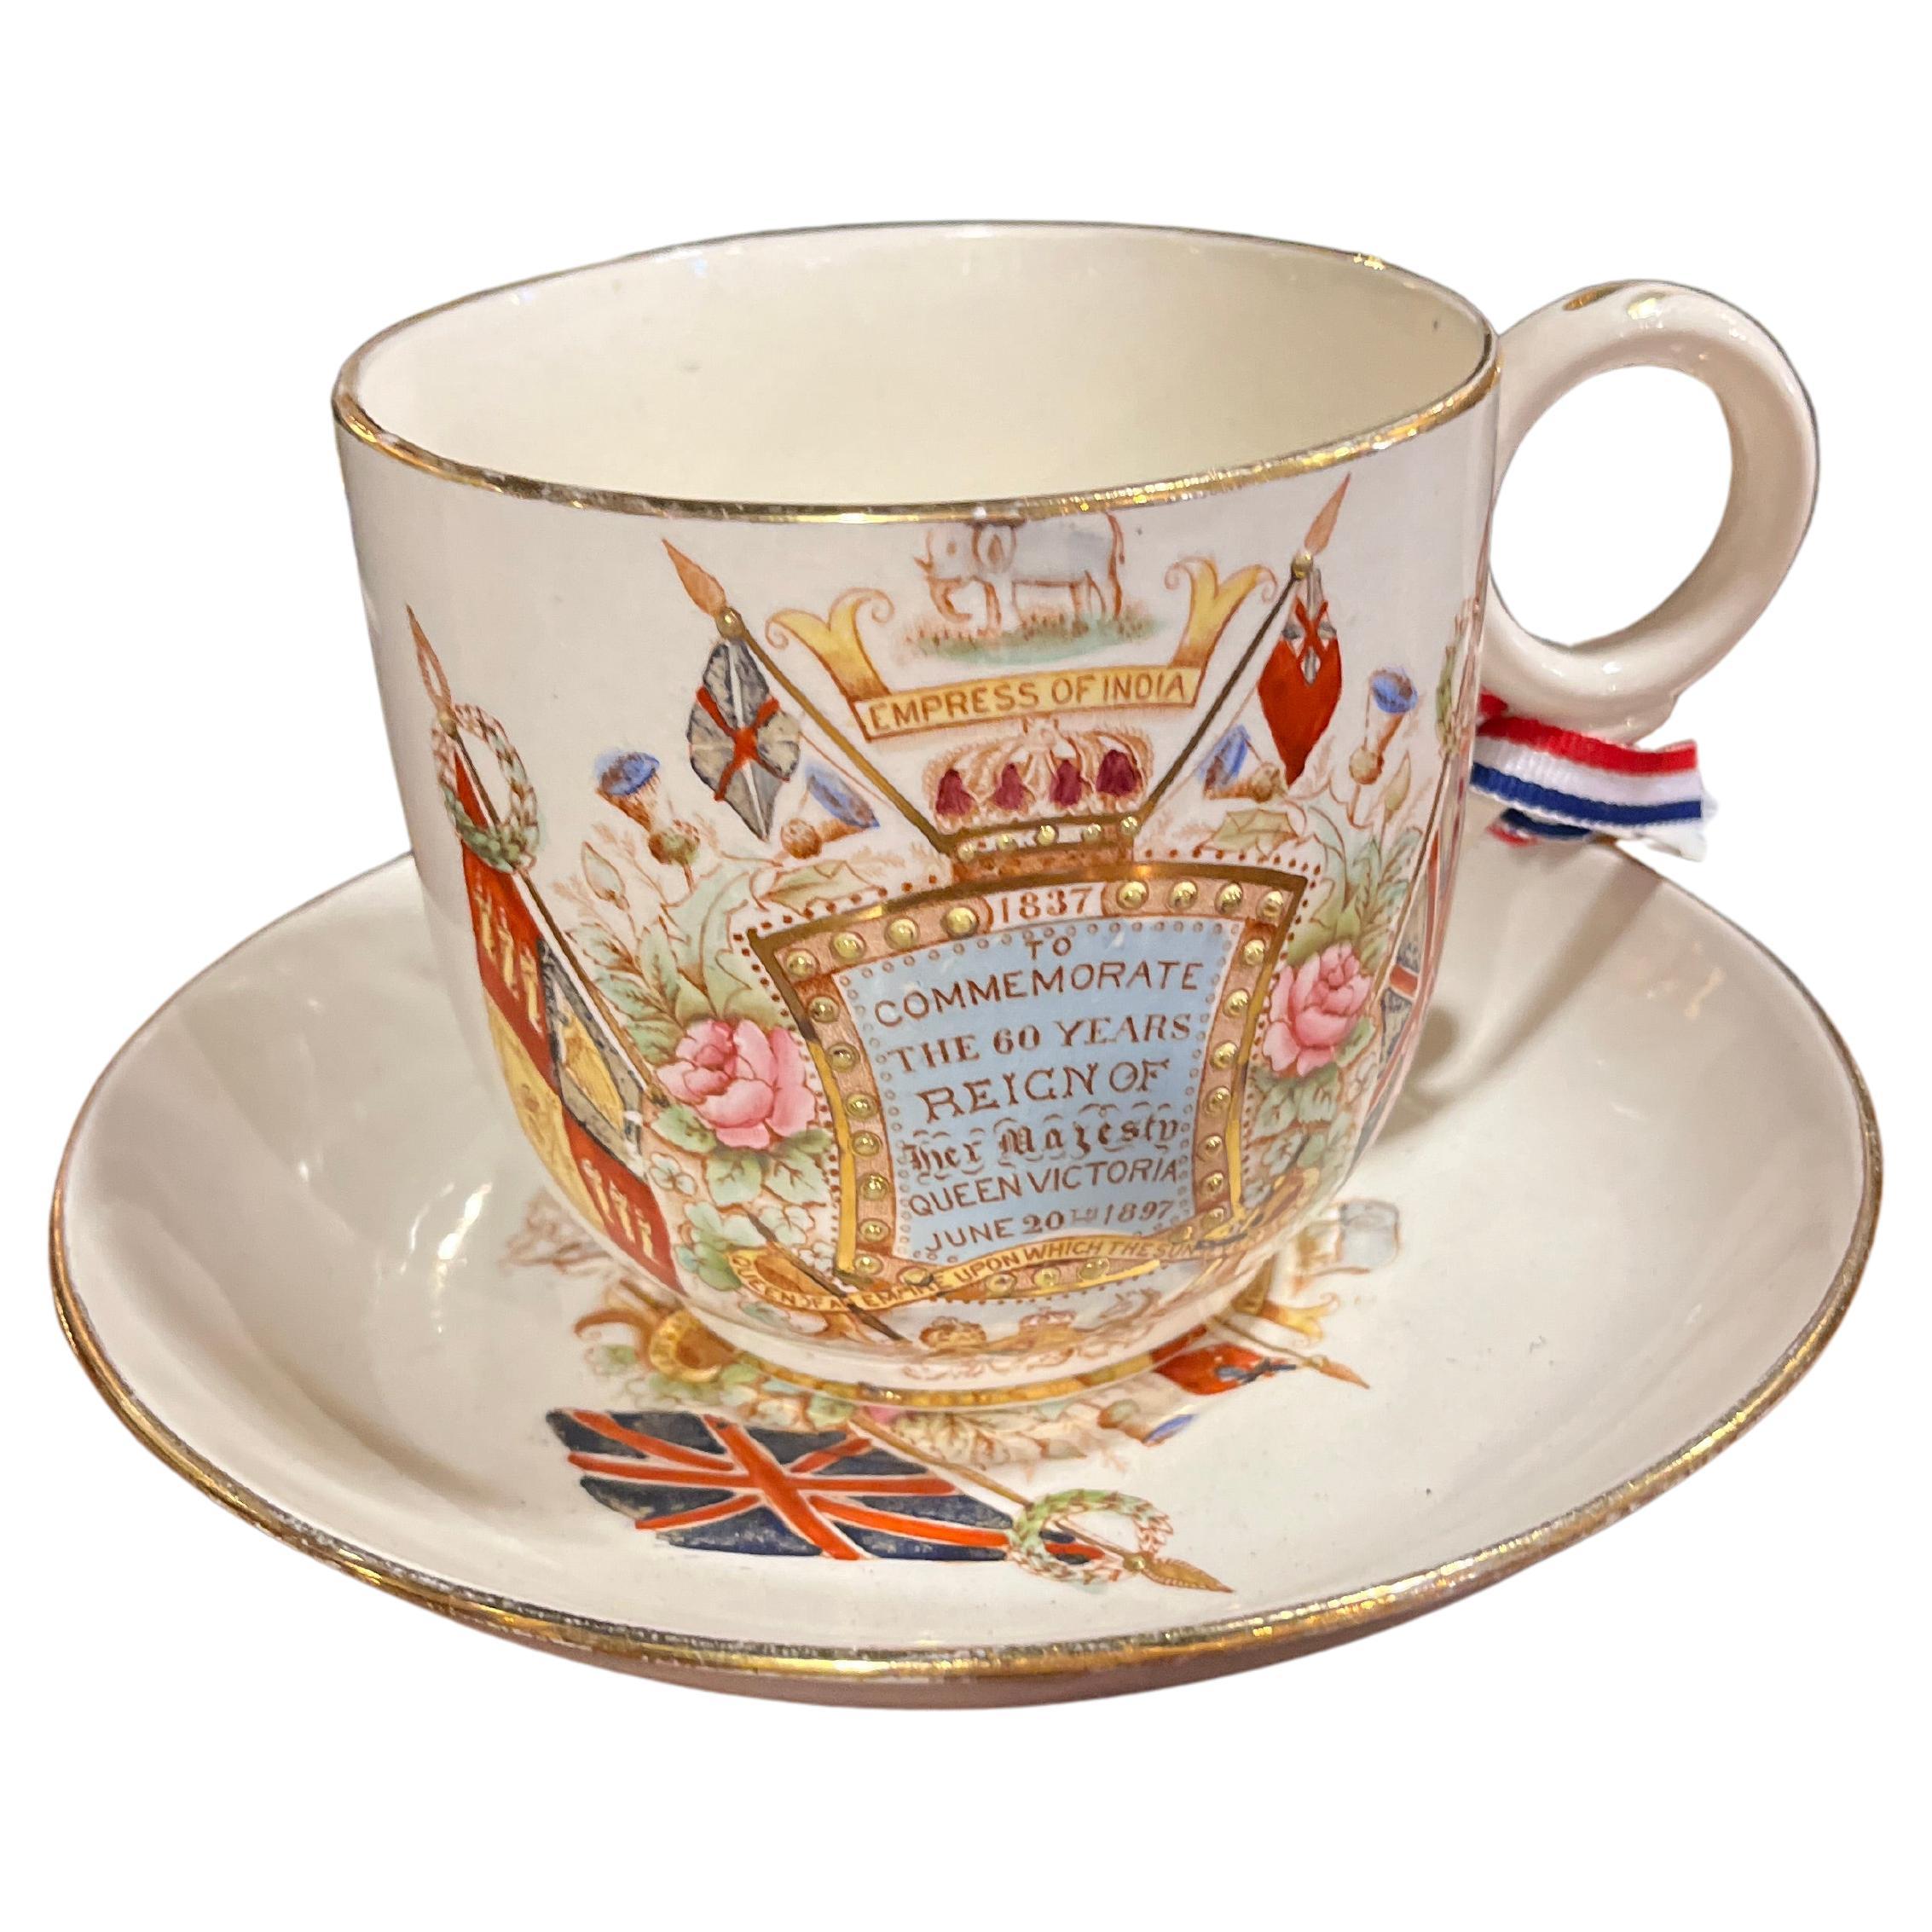 Circa 1897 Queen Victoria's Commemorative Large Cup & Saucer 